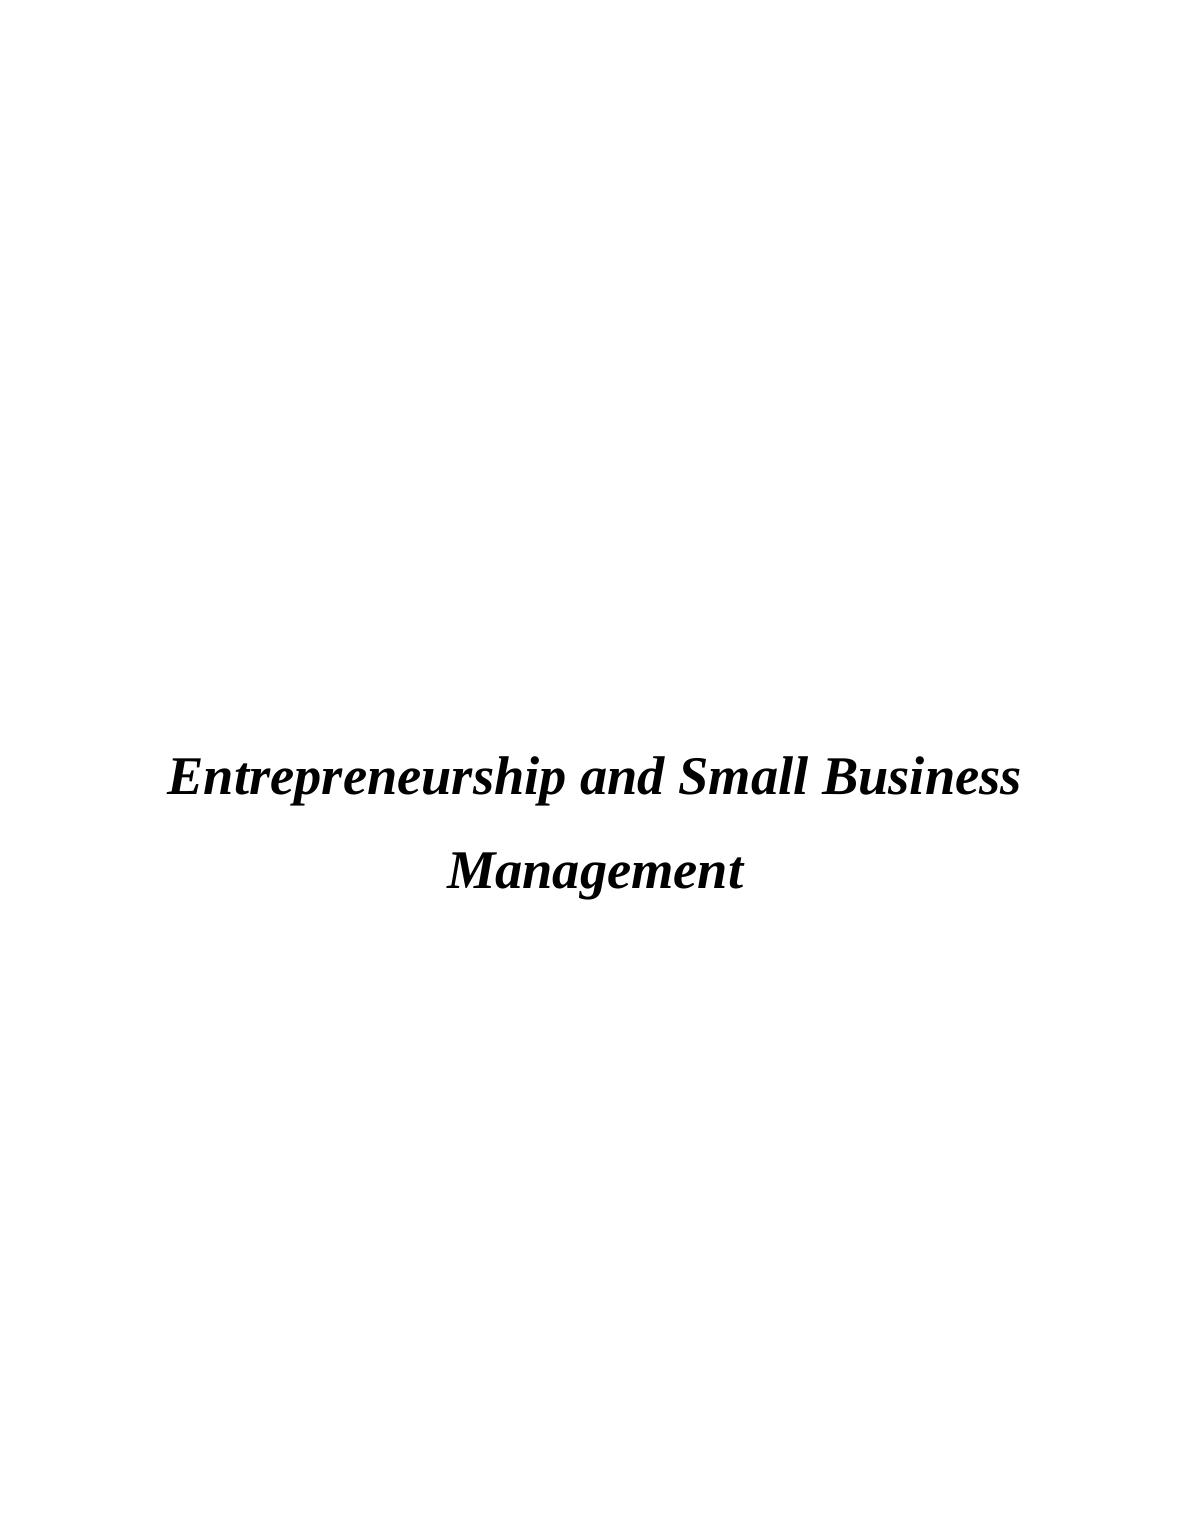 Entrepreneurship and Small Business Management (Doc)_1